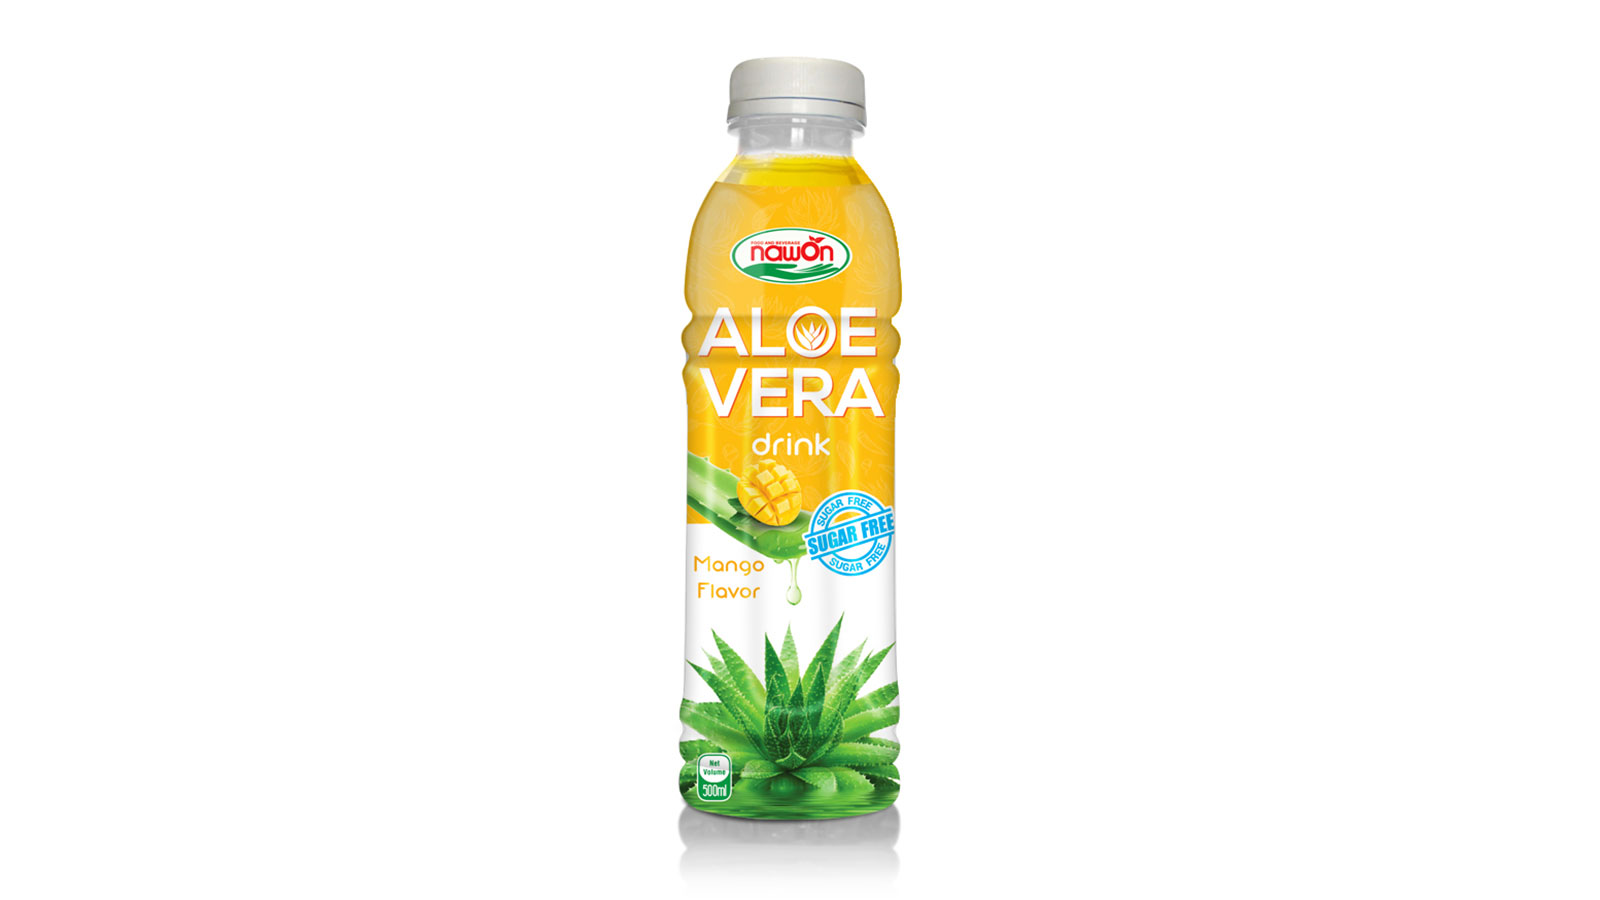 Aloe vera drink with juice flavor